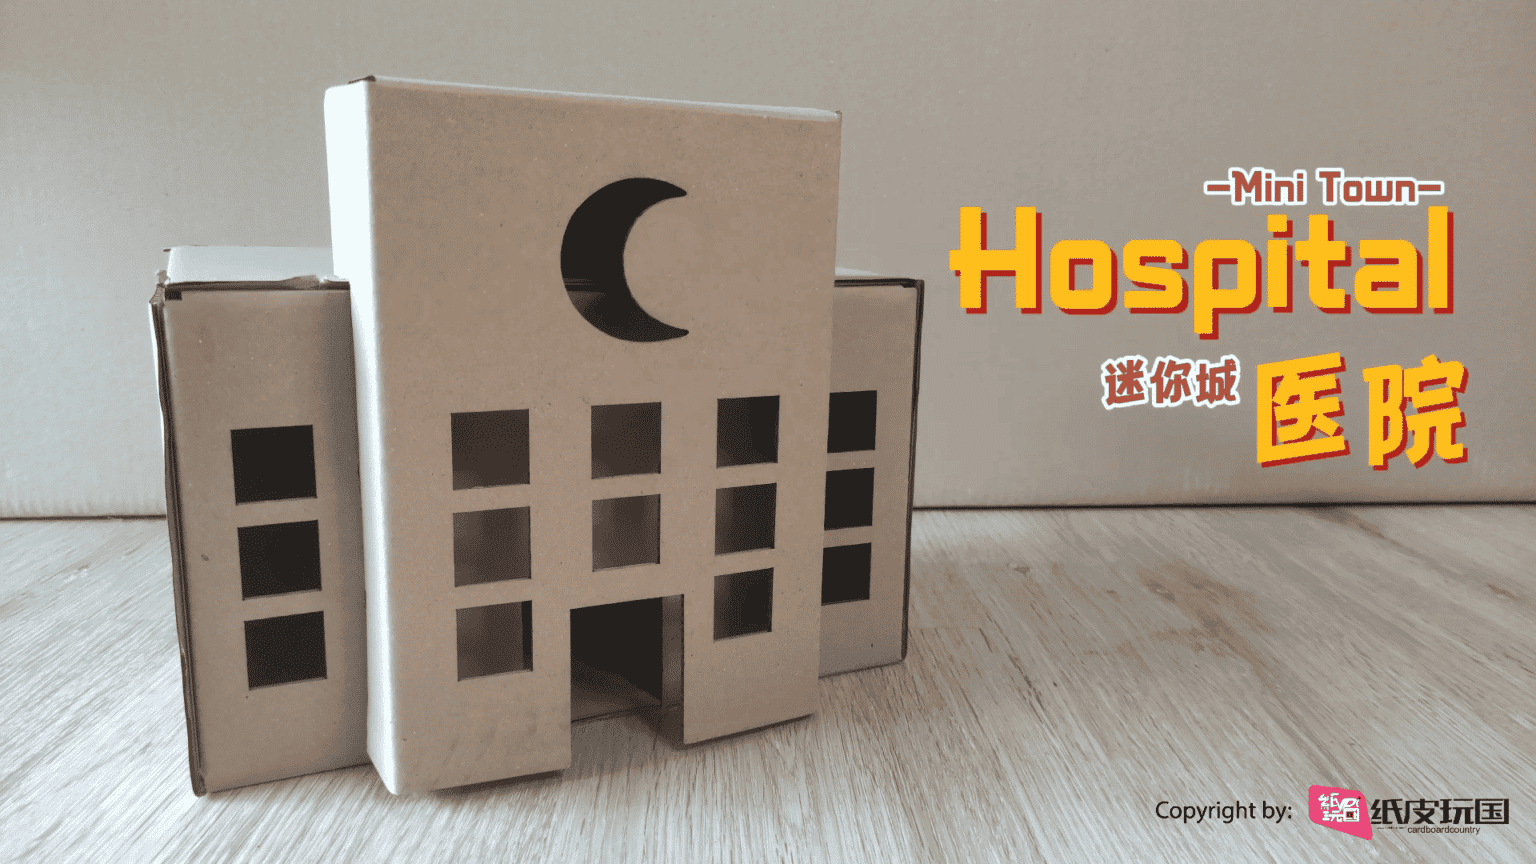 (215) Mini Town_Hospital 迷你城_医院 - YouTube